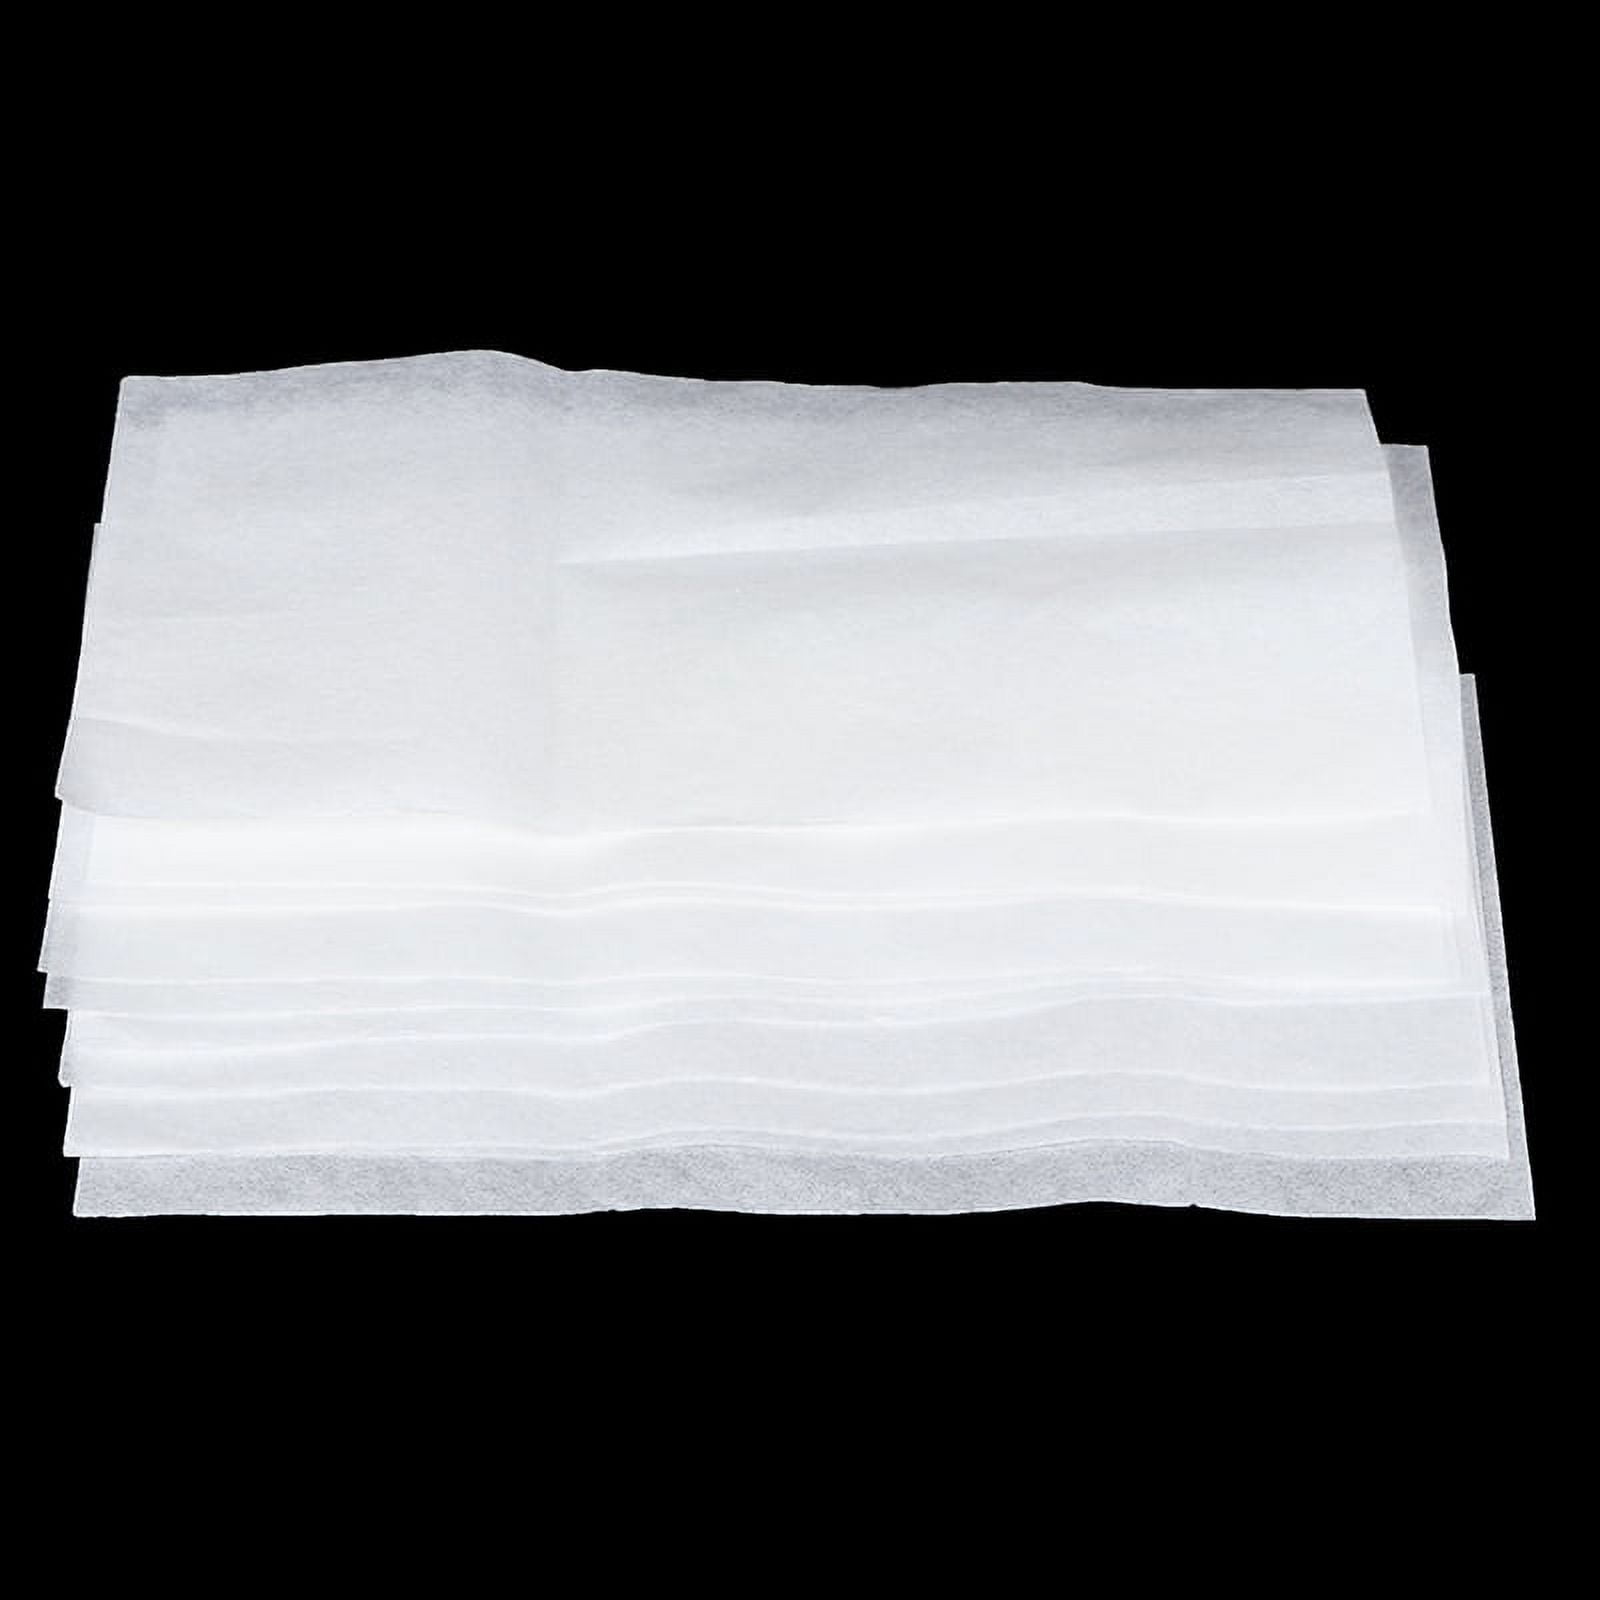 10 sheets Flash Paper / Nitrocellulose Paper / Fire Paper 50x20cm - Fire  Magic – Bemagic